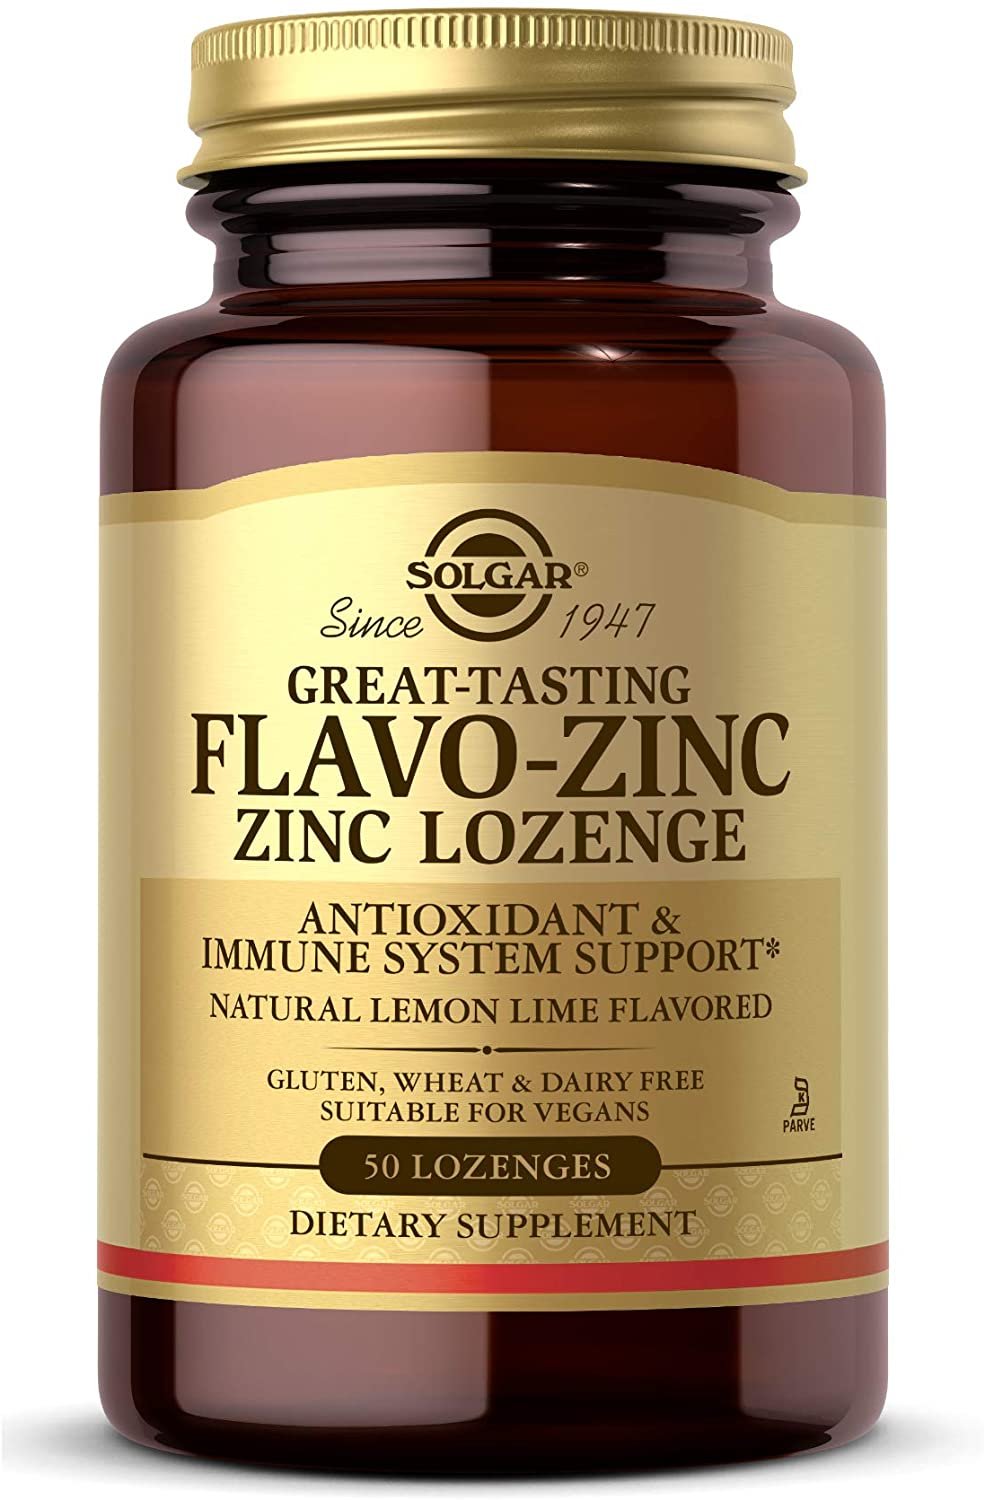 Solgar Flavo-Zinc Lozenge, 50 Count - Great-Tasting Lemon Lime Flavor - Antioxidant, Immune System Health - Highly Absorbable, Dissolves Quickly - Vegan, Gluten Free, Dairy Free, Kosher - 50 Servings